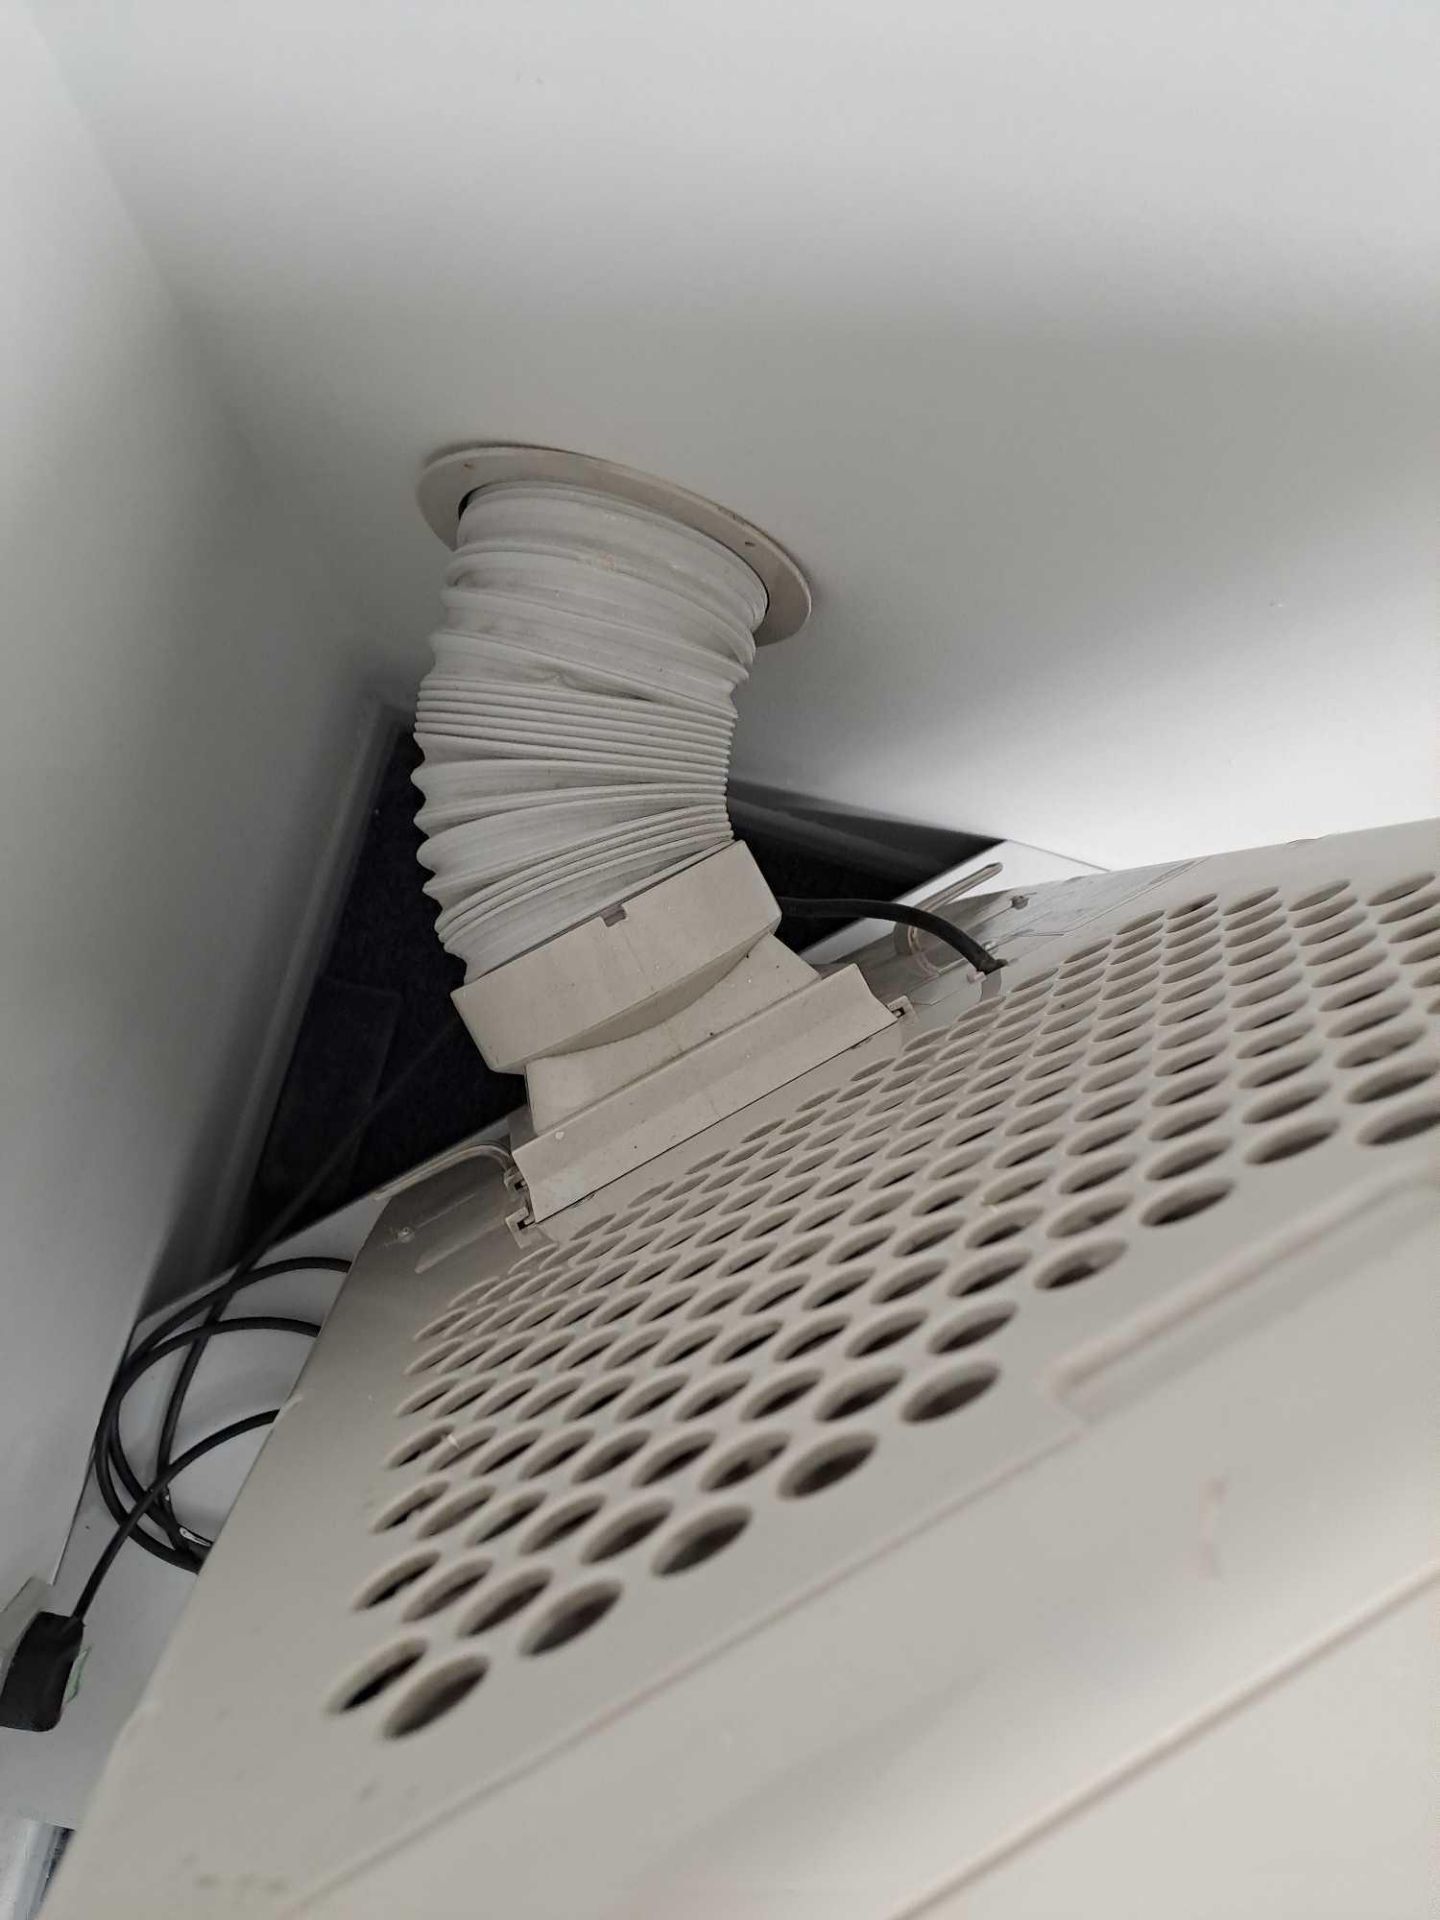 Prem I Air air conditioning unit, 240v - Image 2 of 4